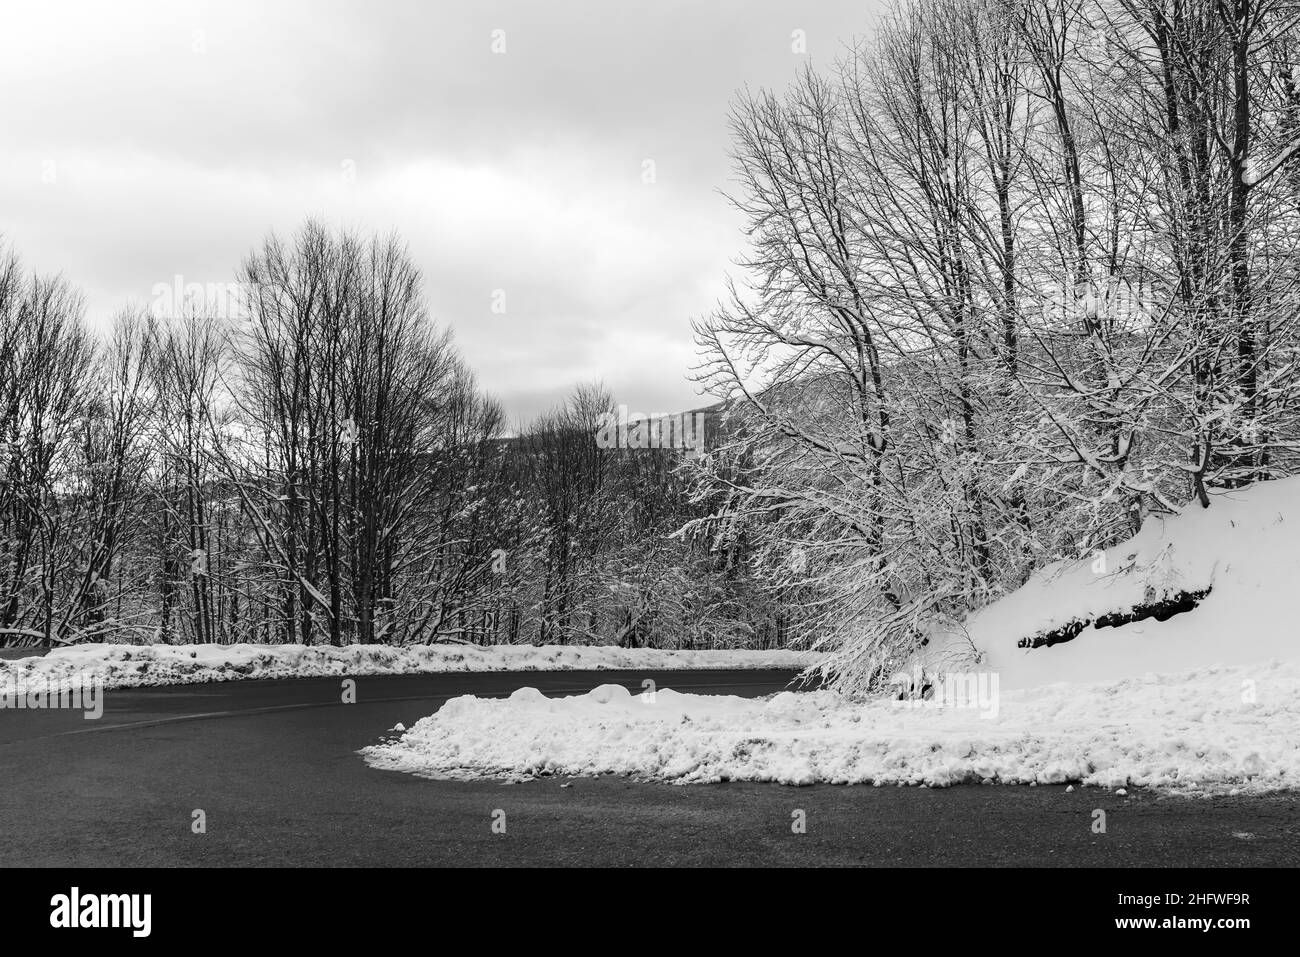 KARTEPE, KOCAELI, TURKEY. Beautiful winter landscape. Winter snowy forest with road. Stock Photo